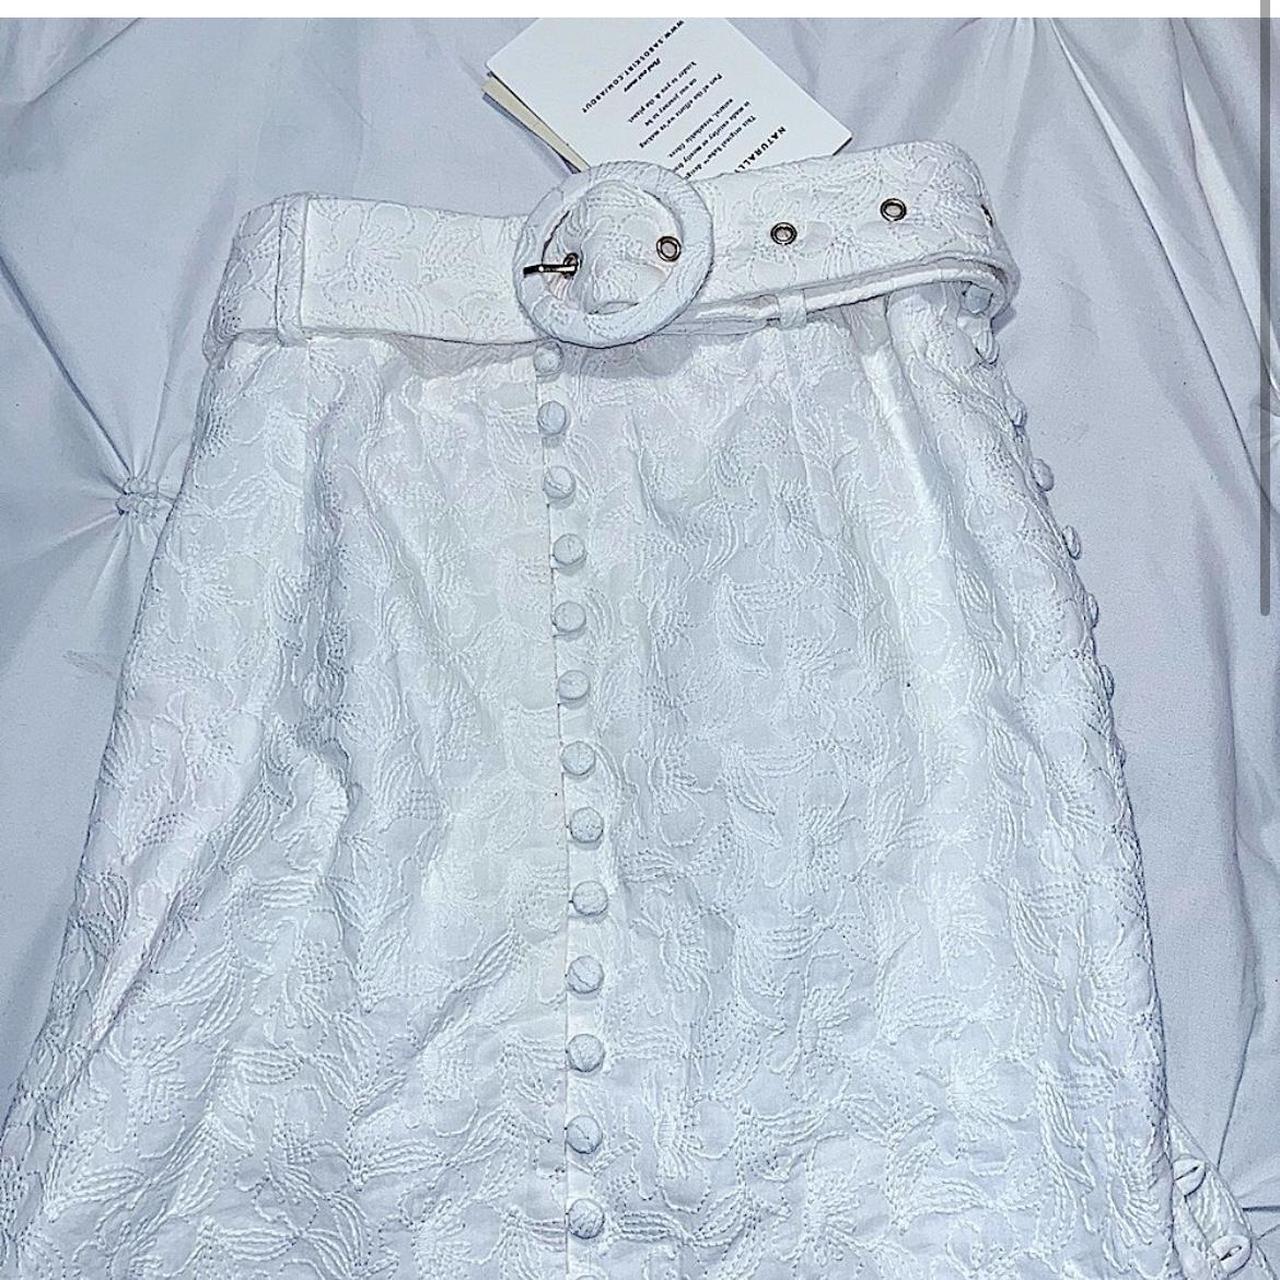 Product Image 2 - Size xsmall
Still nwt
Karmella skirt
Originally 58$

The